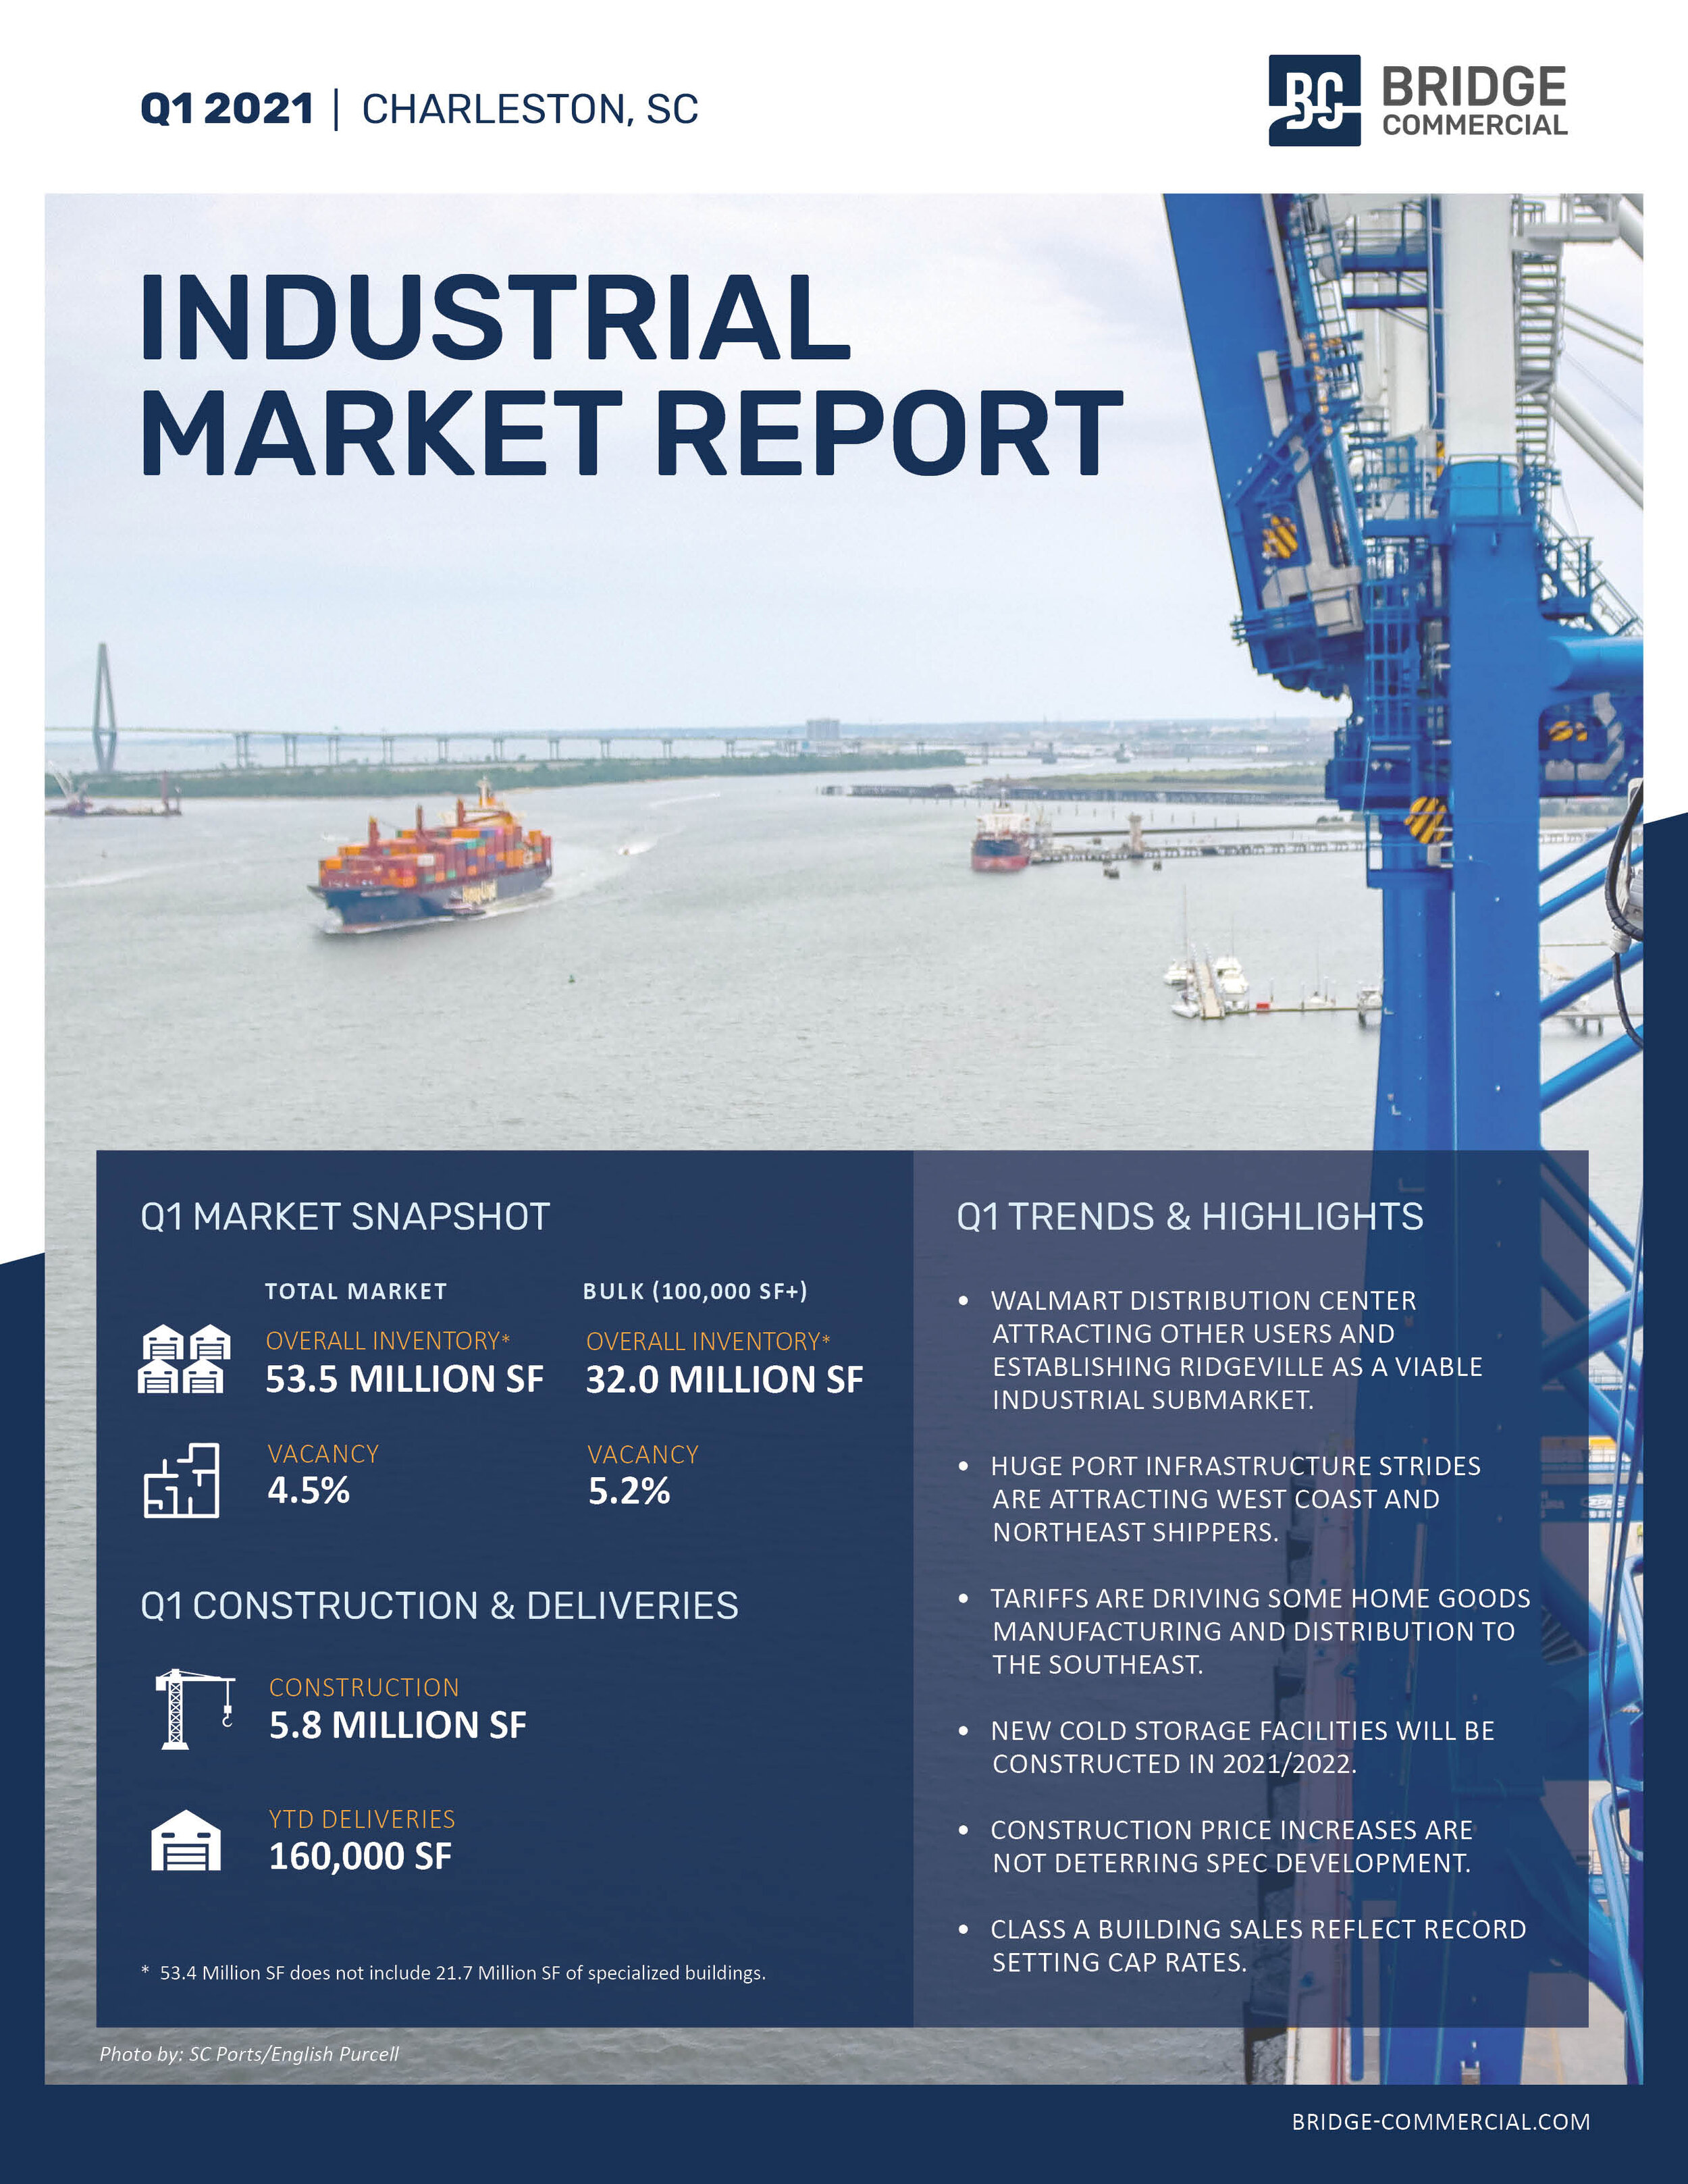 Q1 2021 Charleston Industrial Market Report_Bridge Commercial.jpg